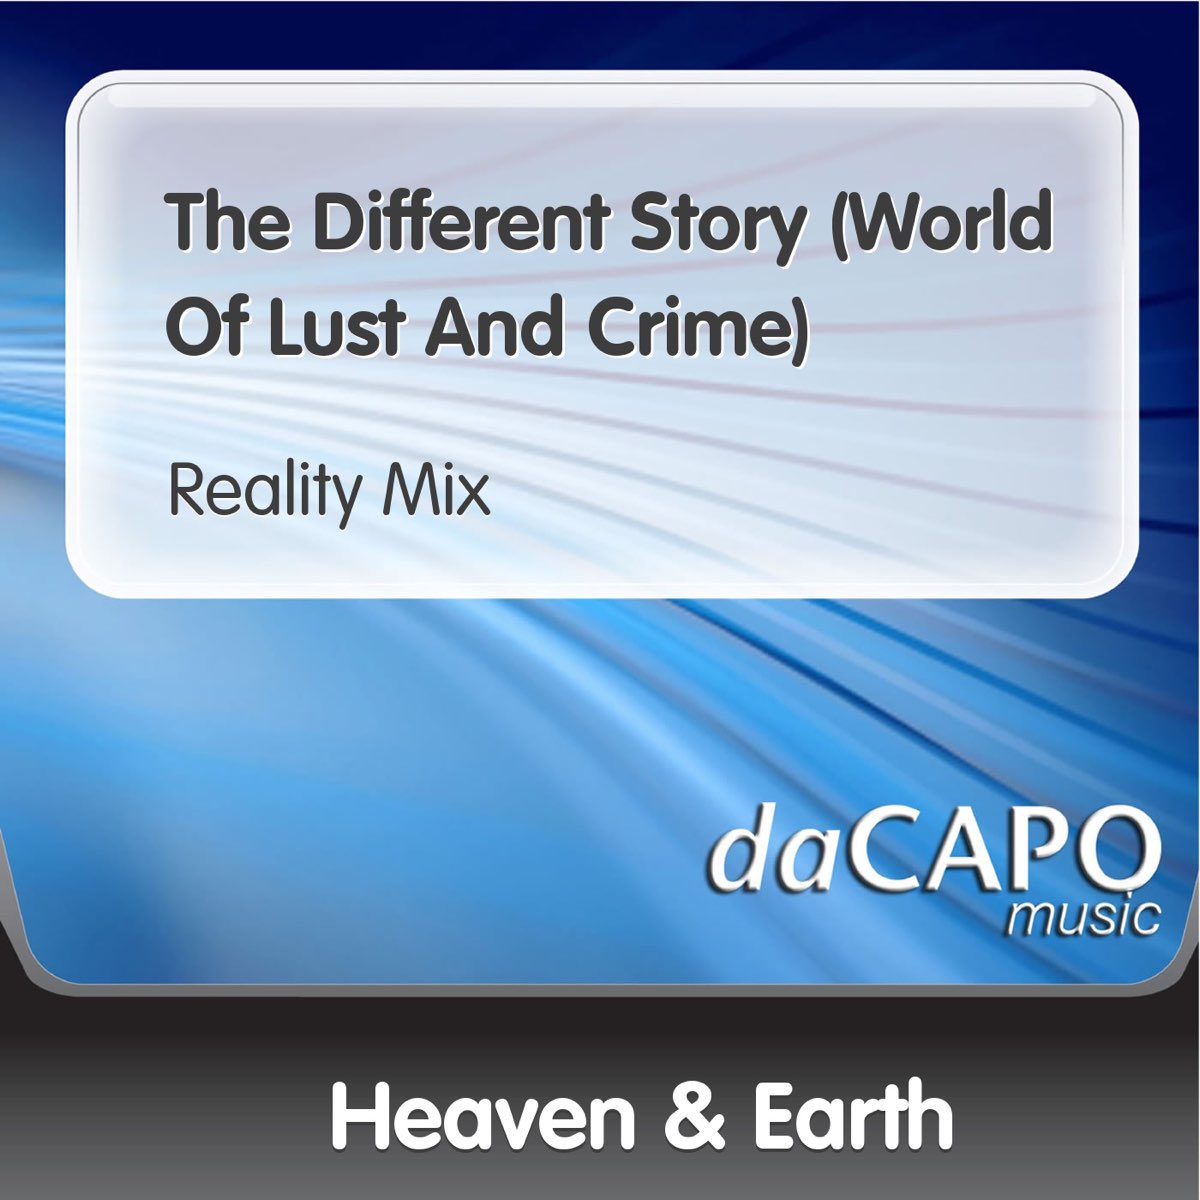 The Different Story World Of Lust And Crime Single Av Heaven Earth Pa Apple Music